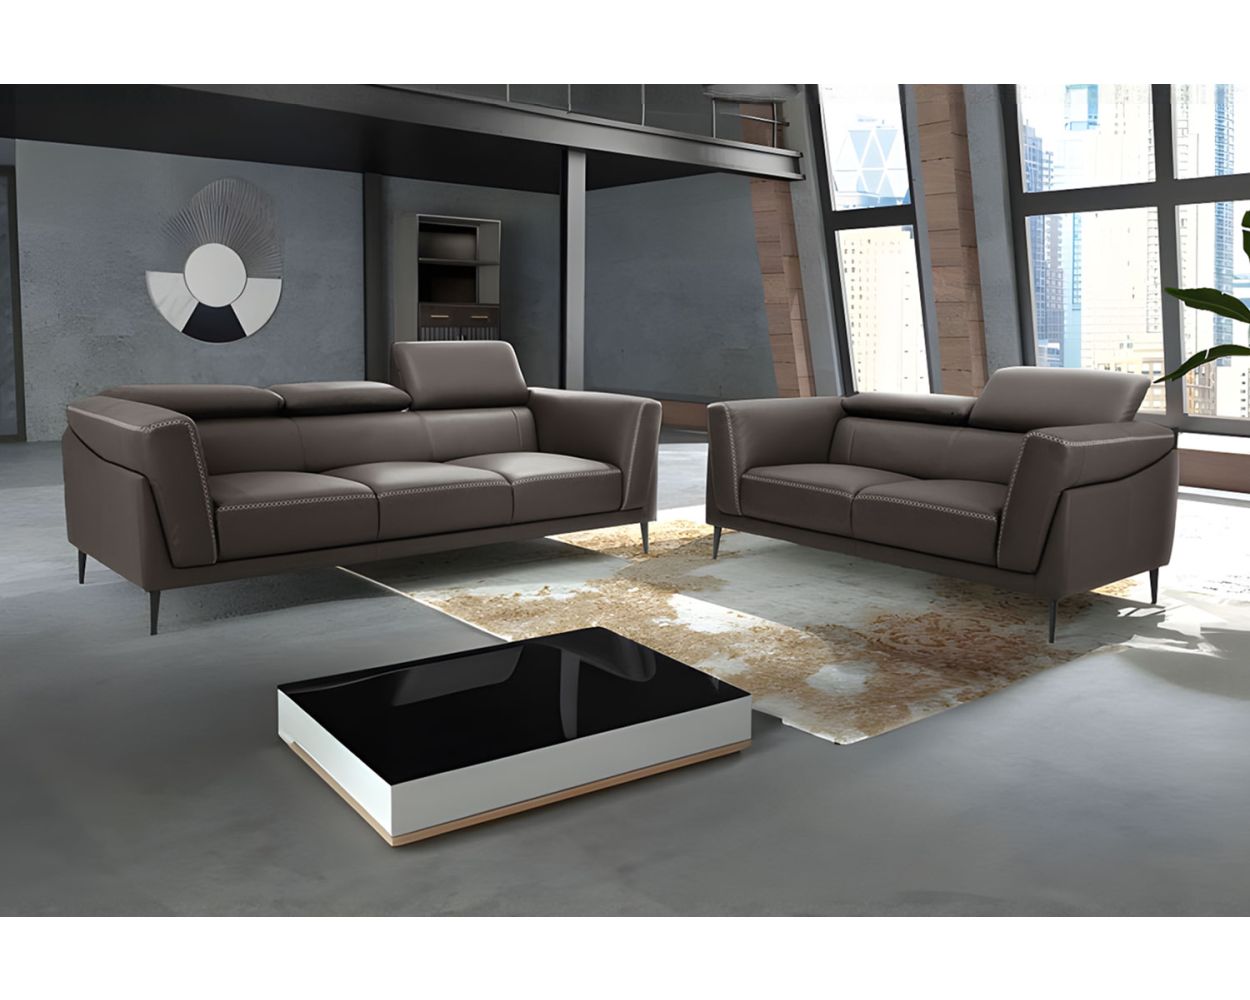 Kh262 Sofa Leather Set 3 2 Online